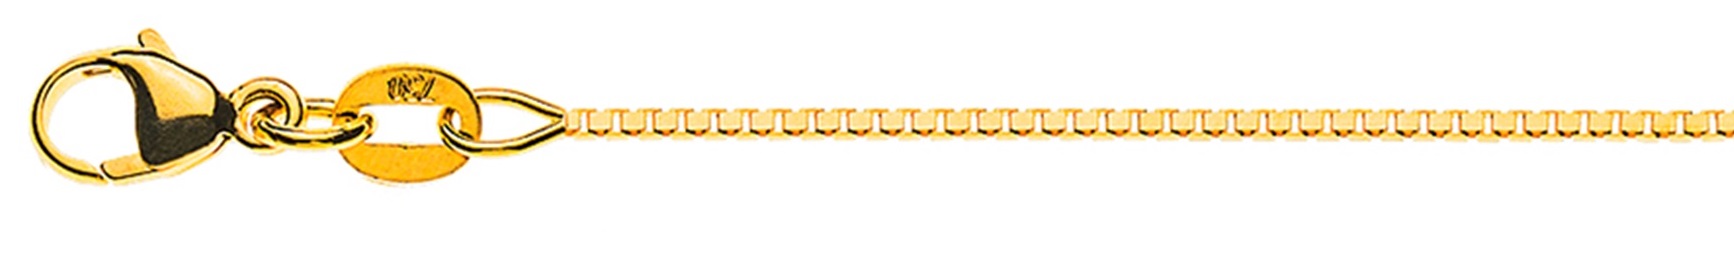 AURONOS Style Necklace yellow gold 9K Venetian chain diamond 60cm 0.9mm